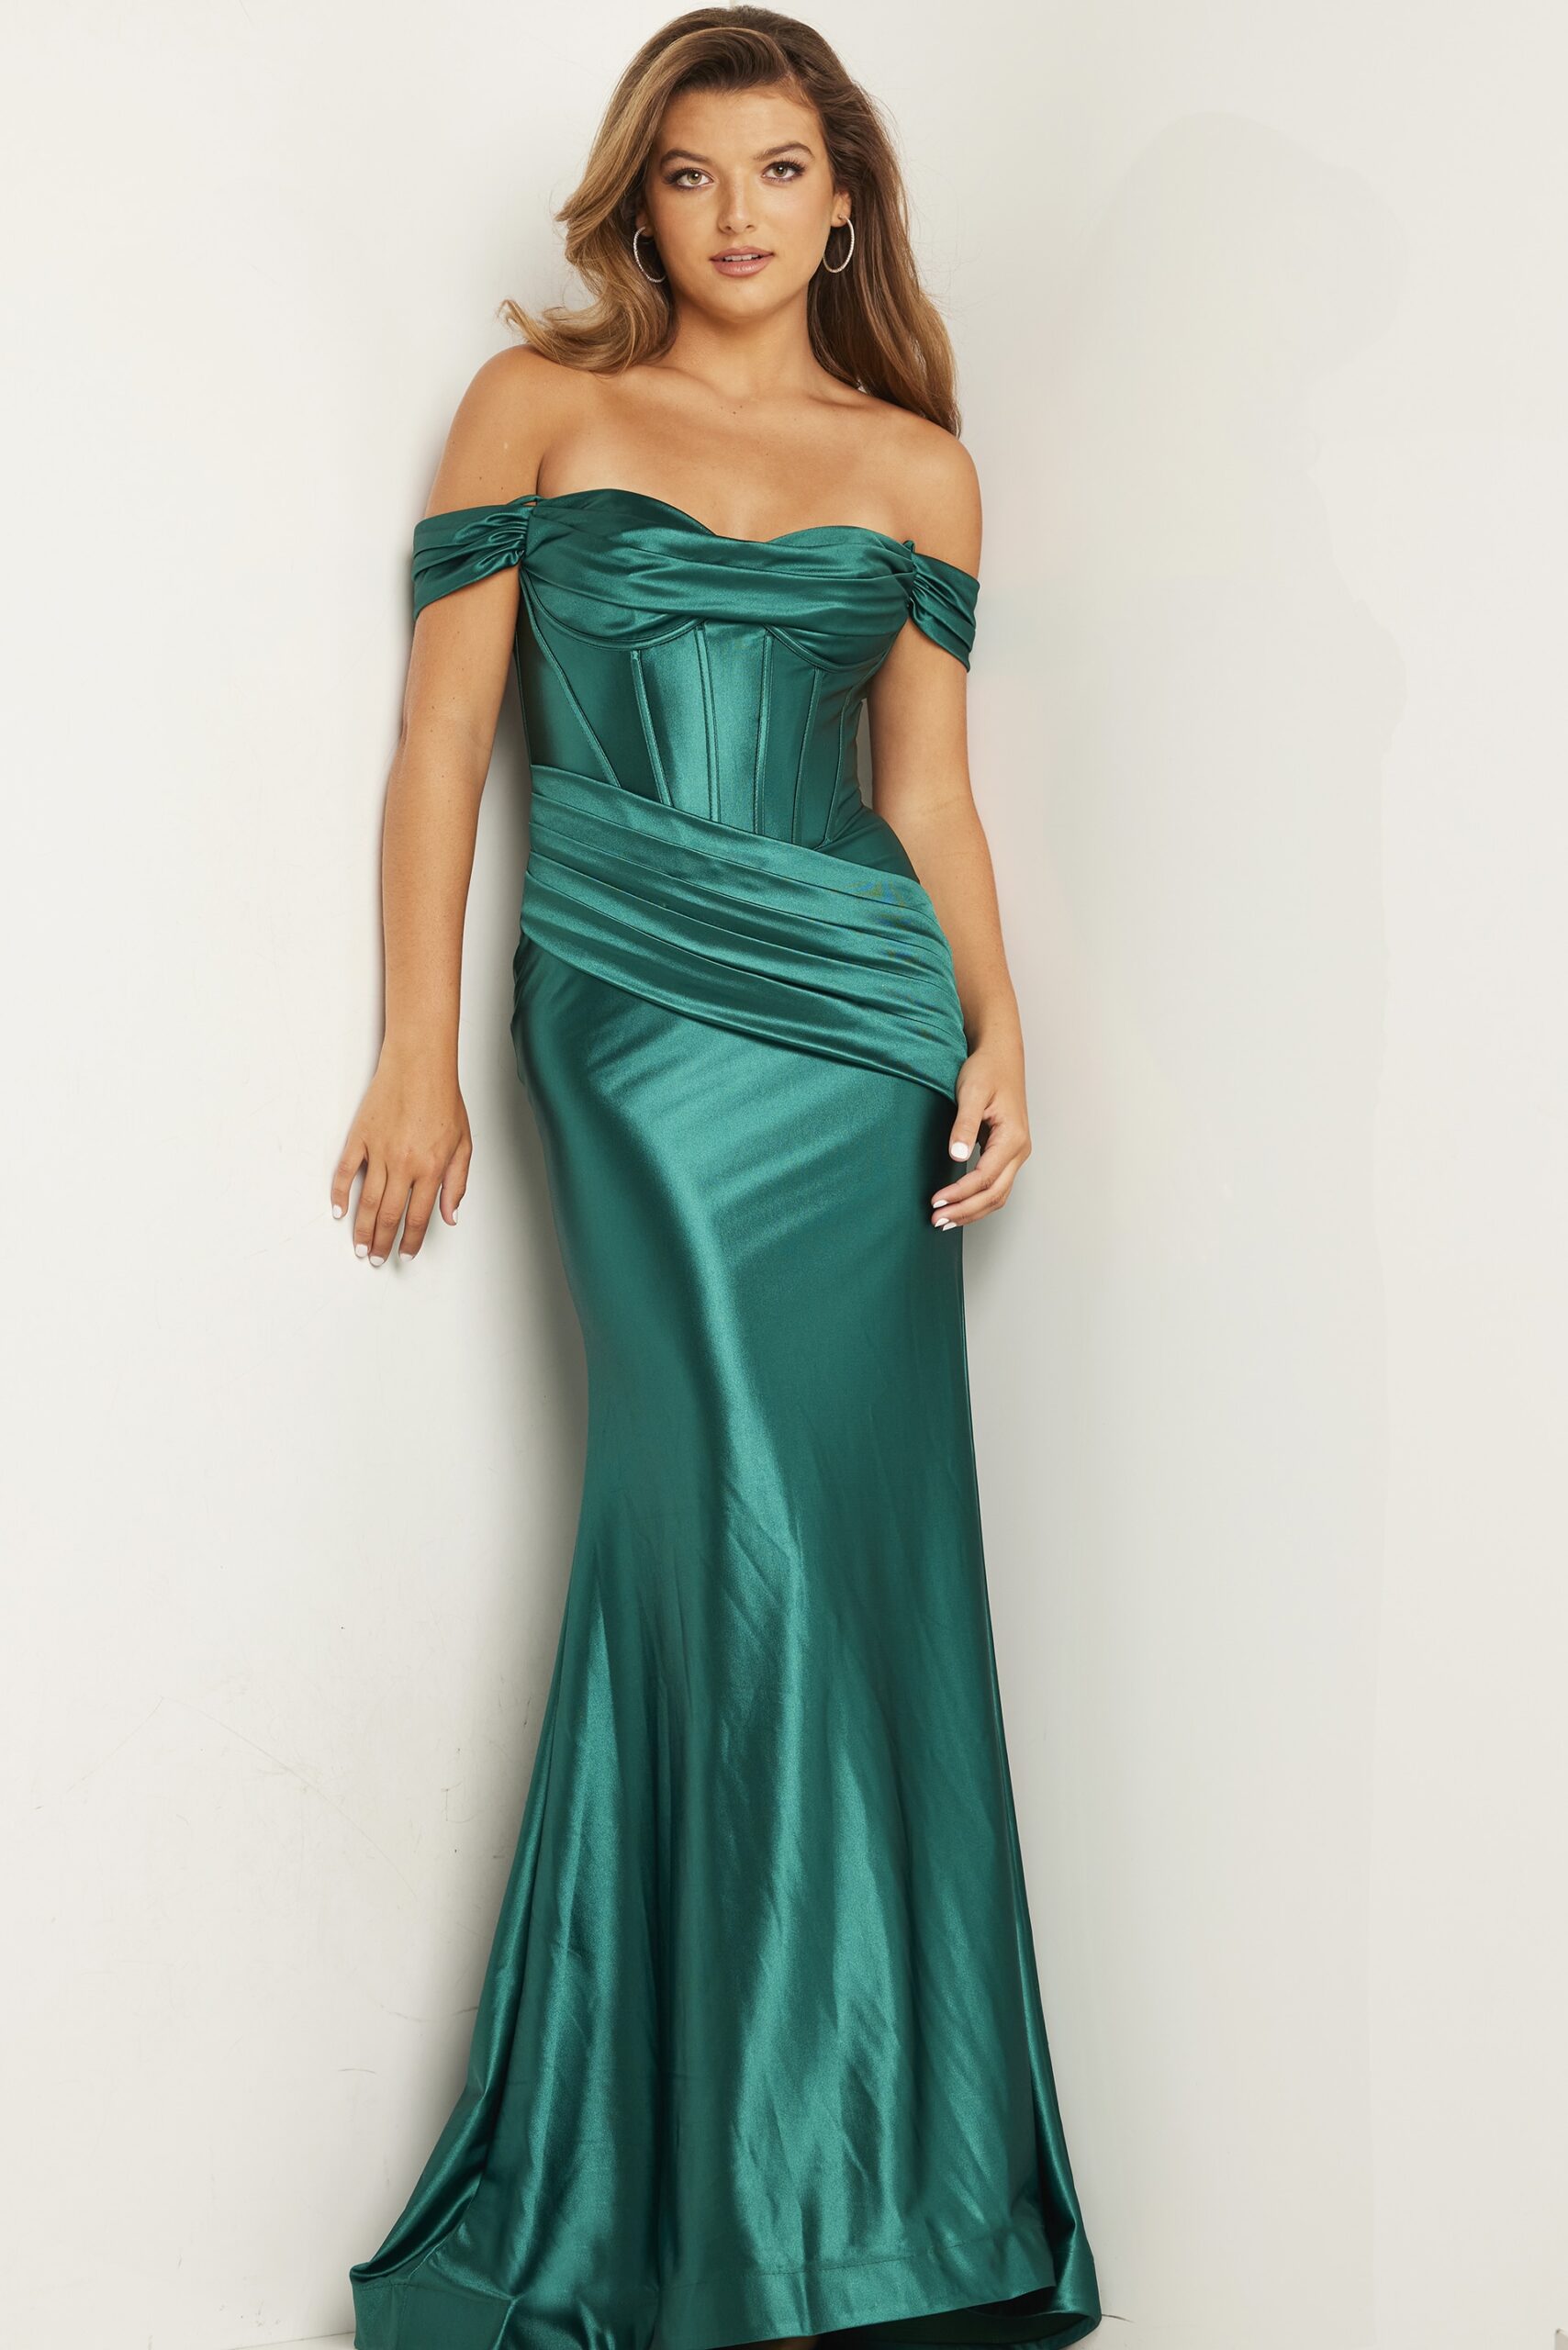 Emerald Off the Shoulder Dress 37521